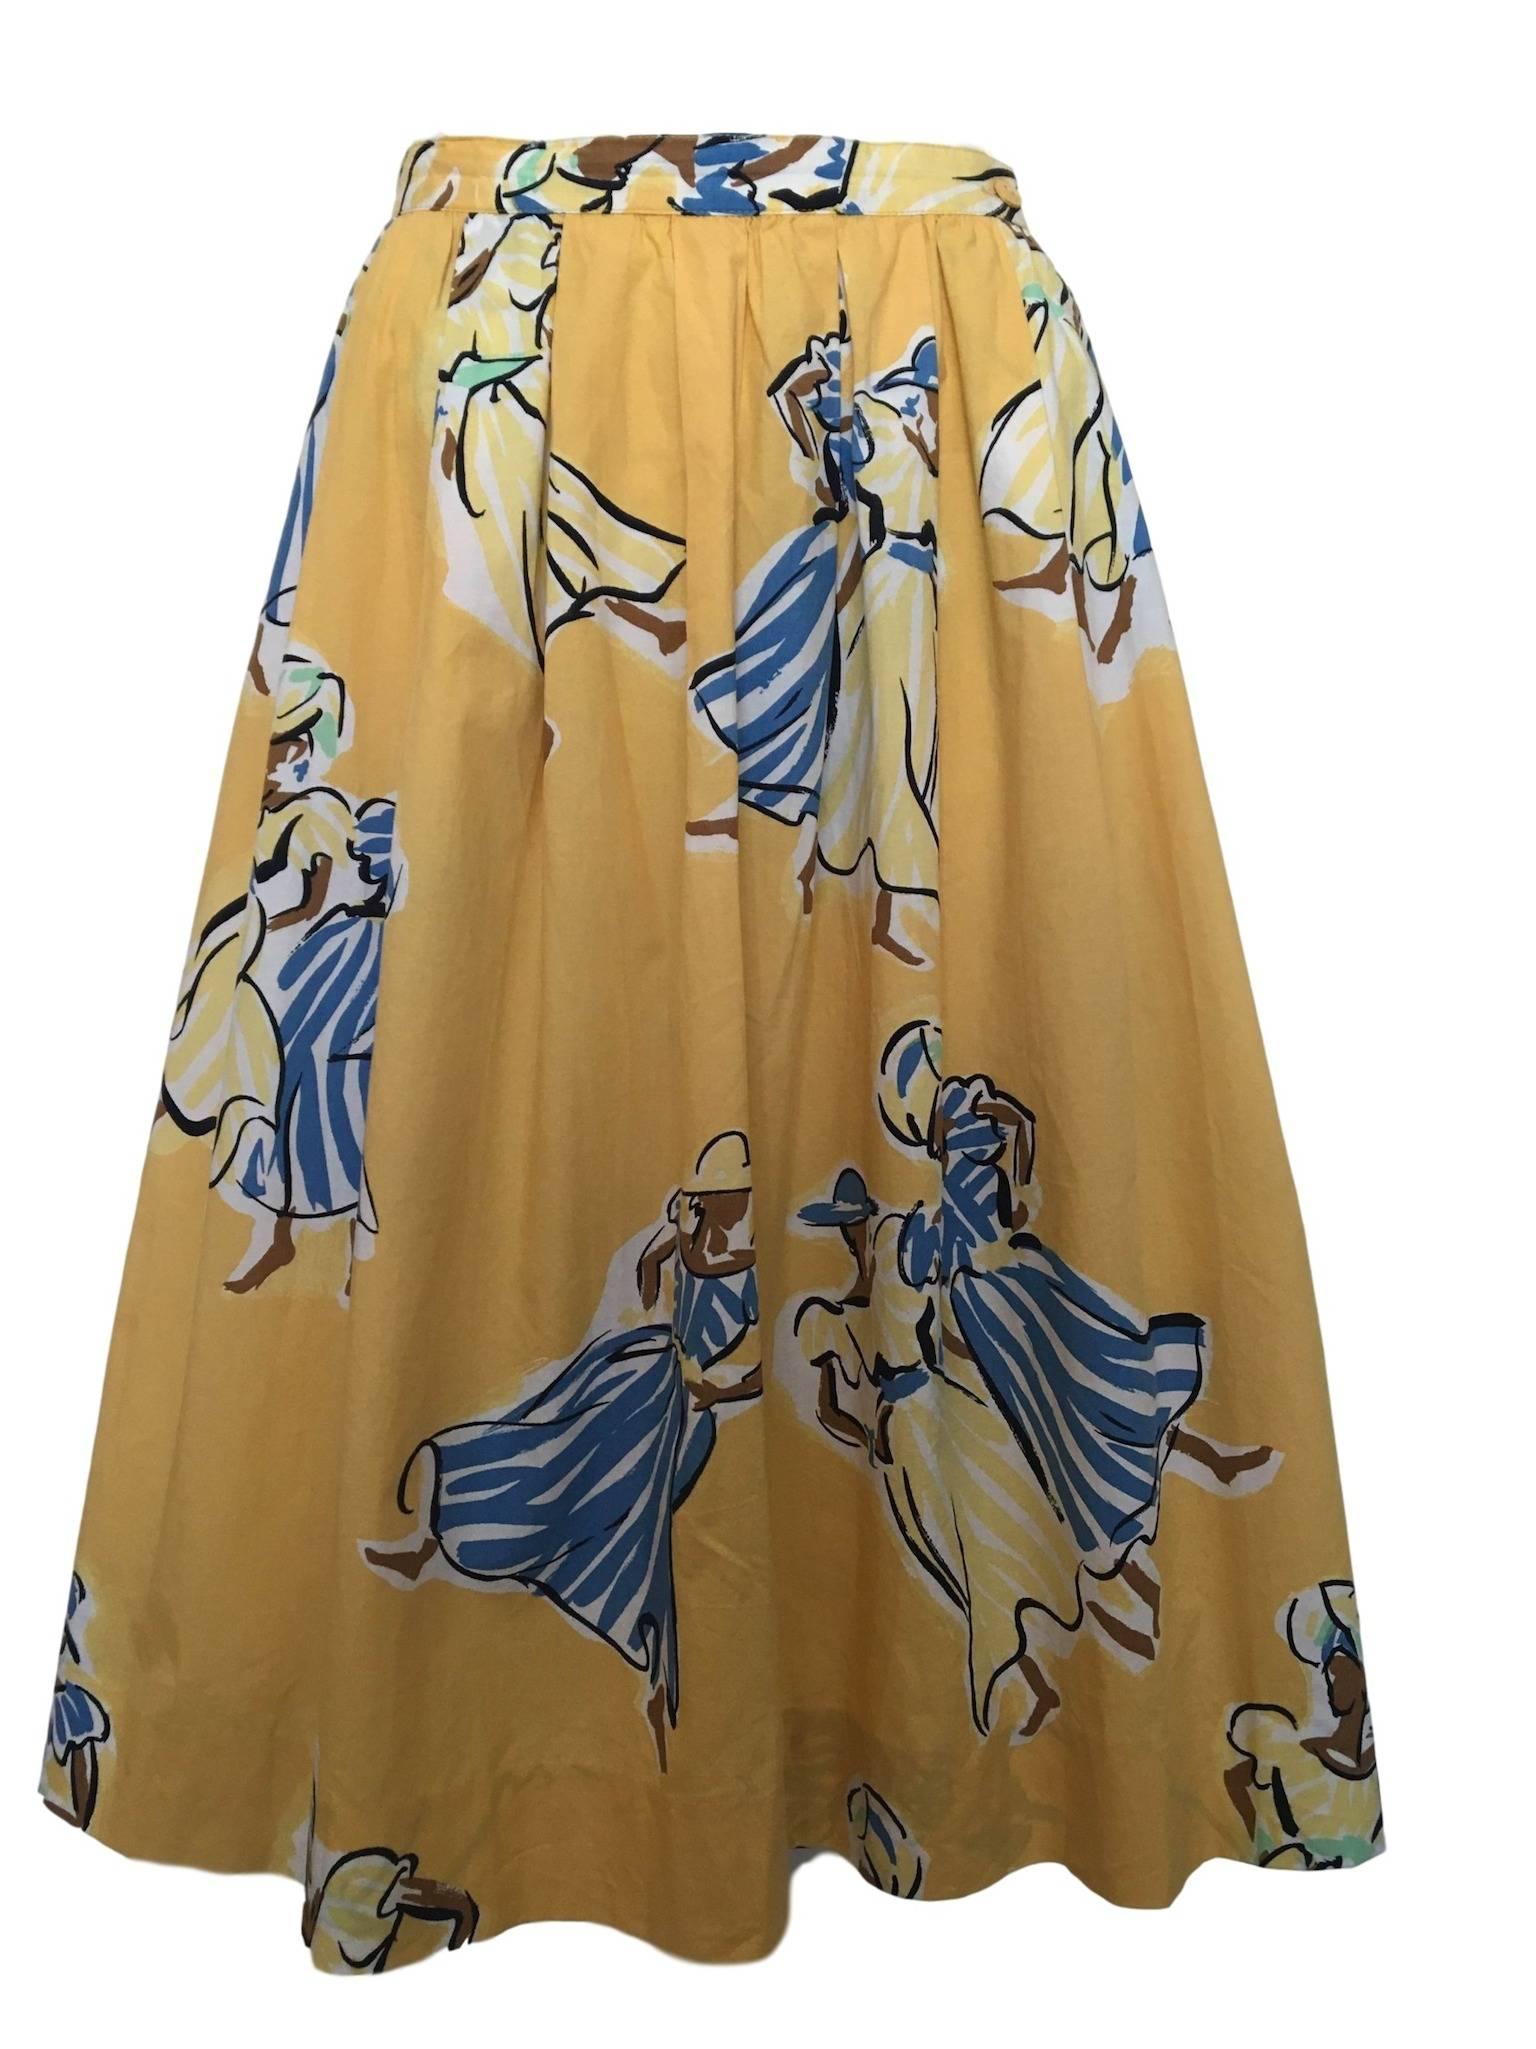 Brown Gerard Darel Vintage Novelty Print Skirt Cotton 1980s 